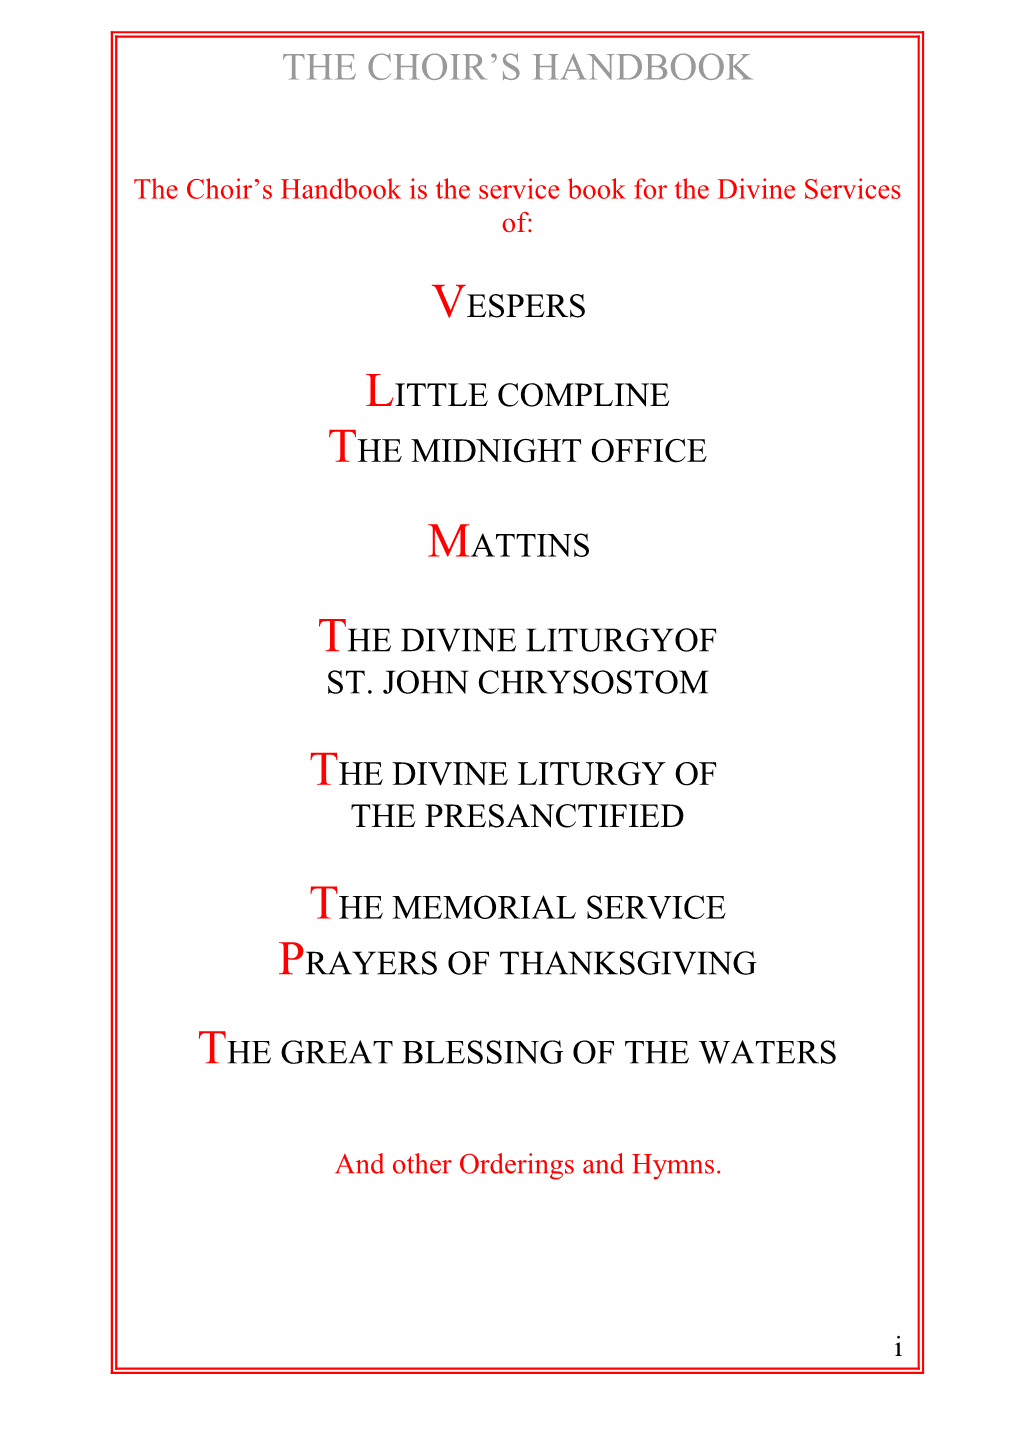 The Choir's Handbook